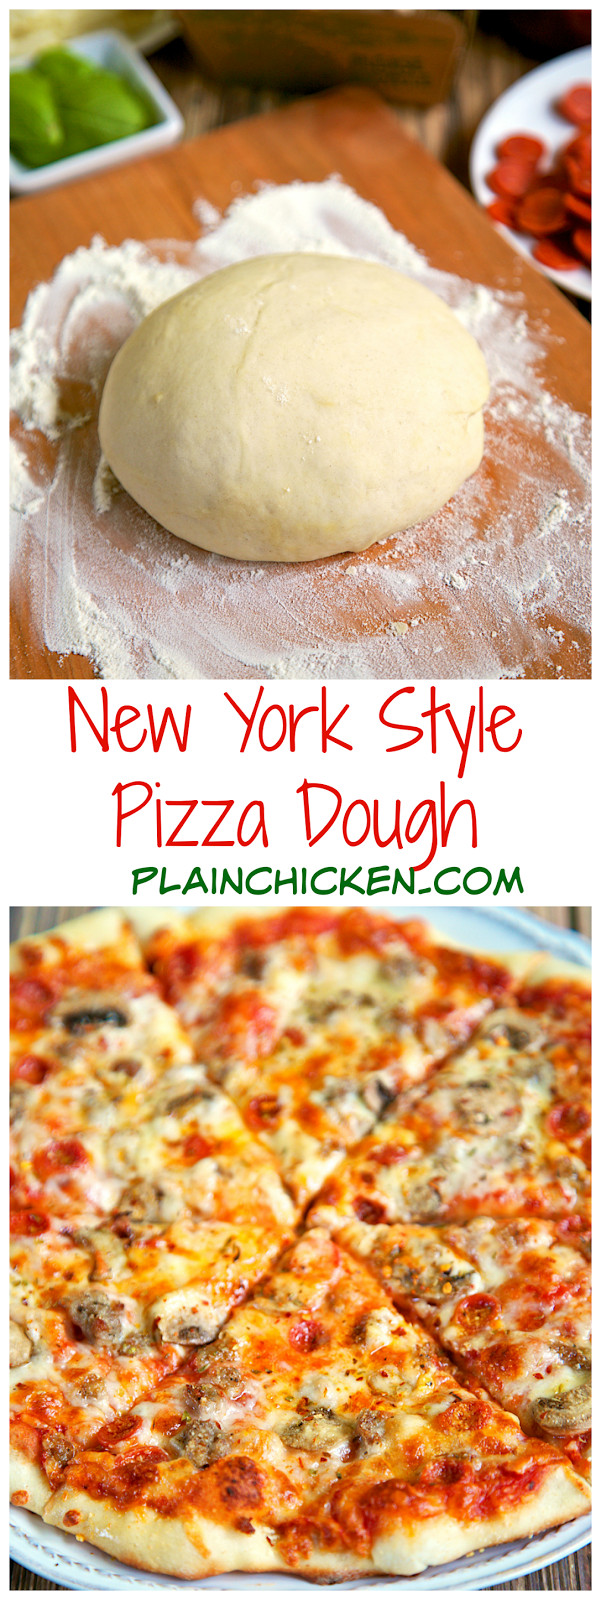 New York Style Pizza Dough Recipe
 New York Style Pizza Dough